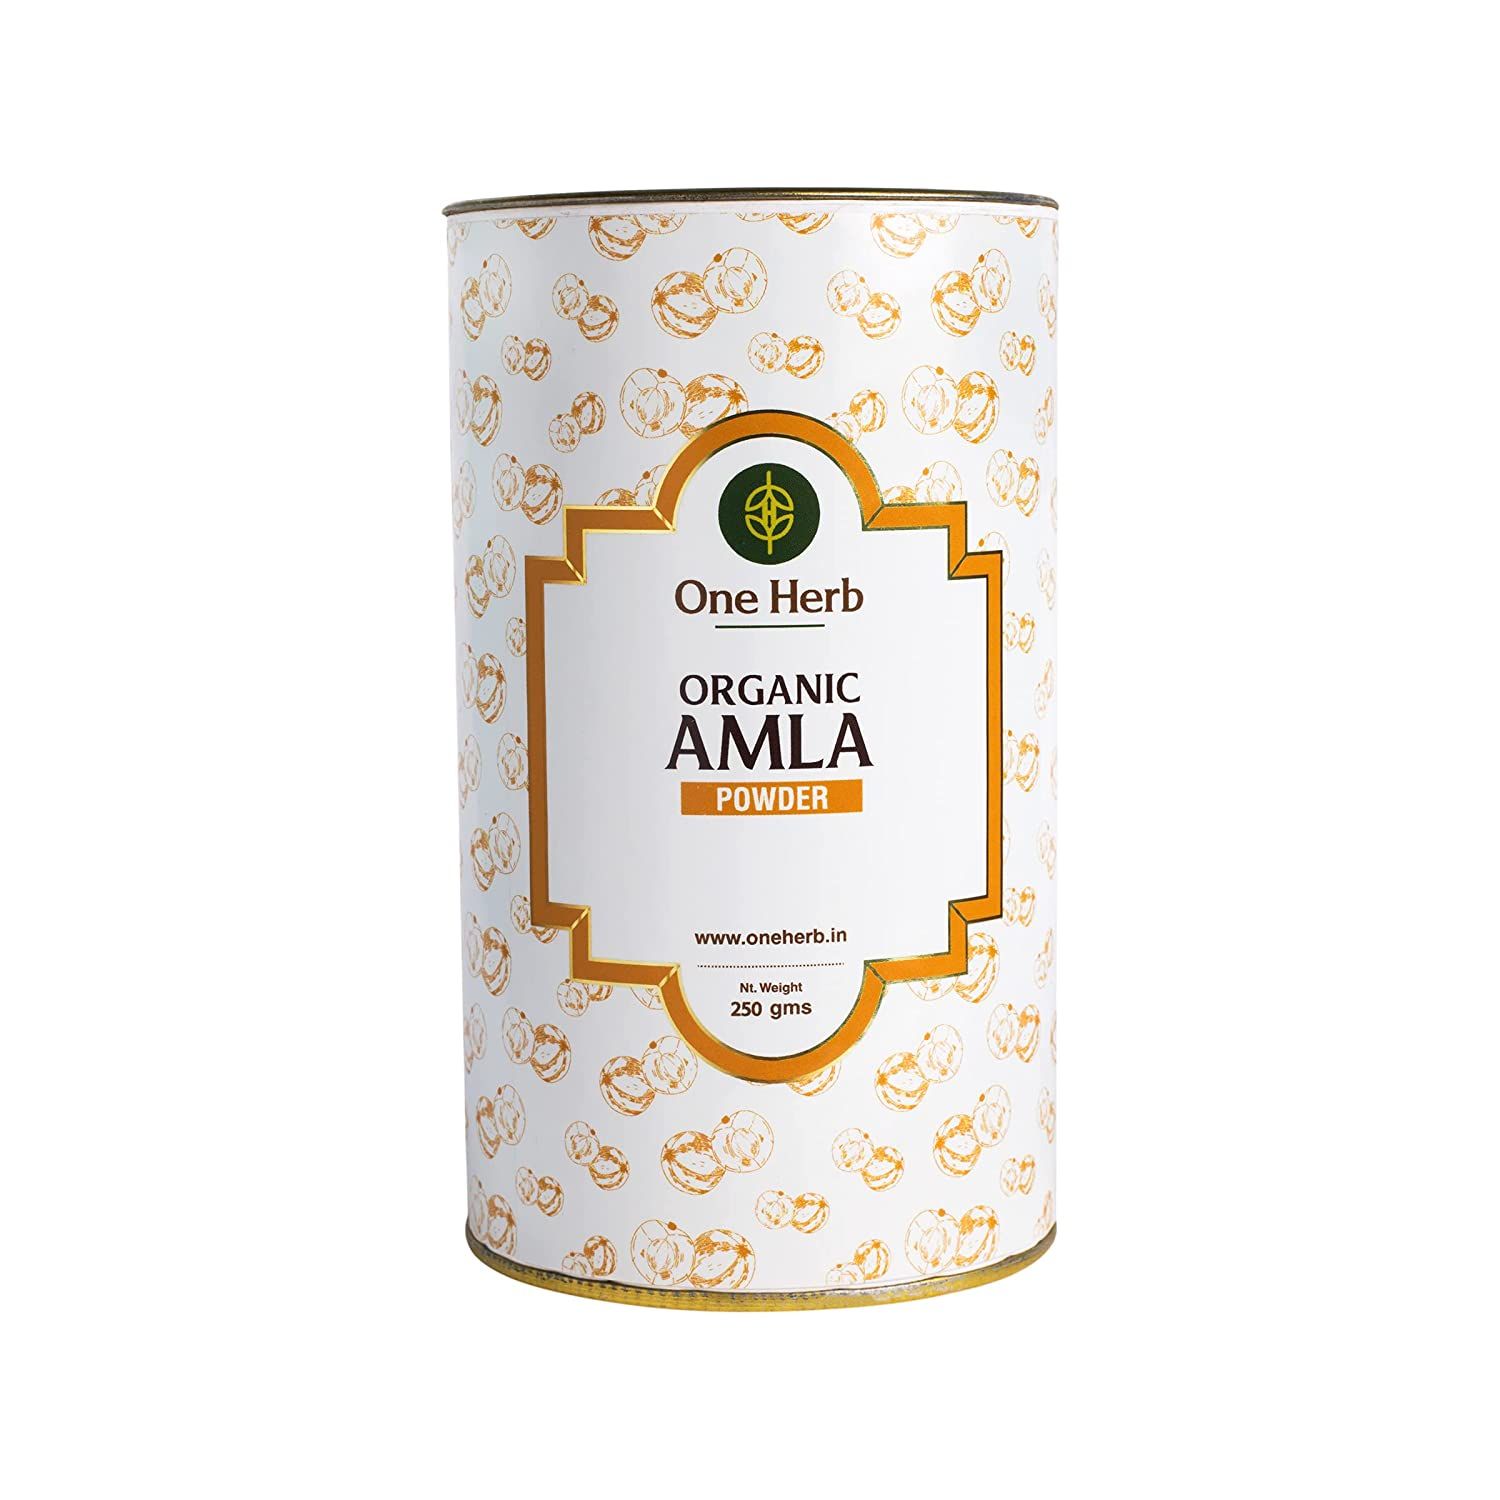 One Herb Organic Amla Powder Image